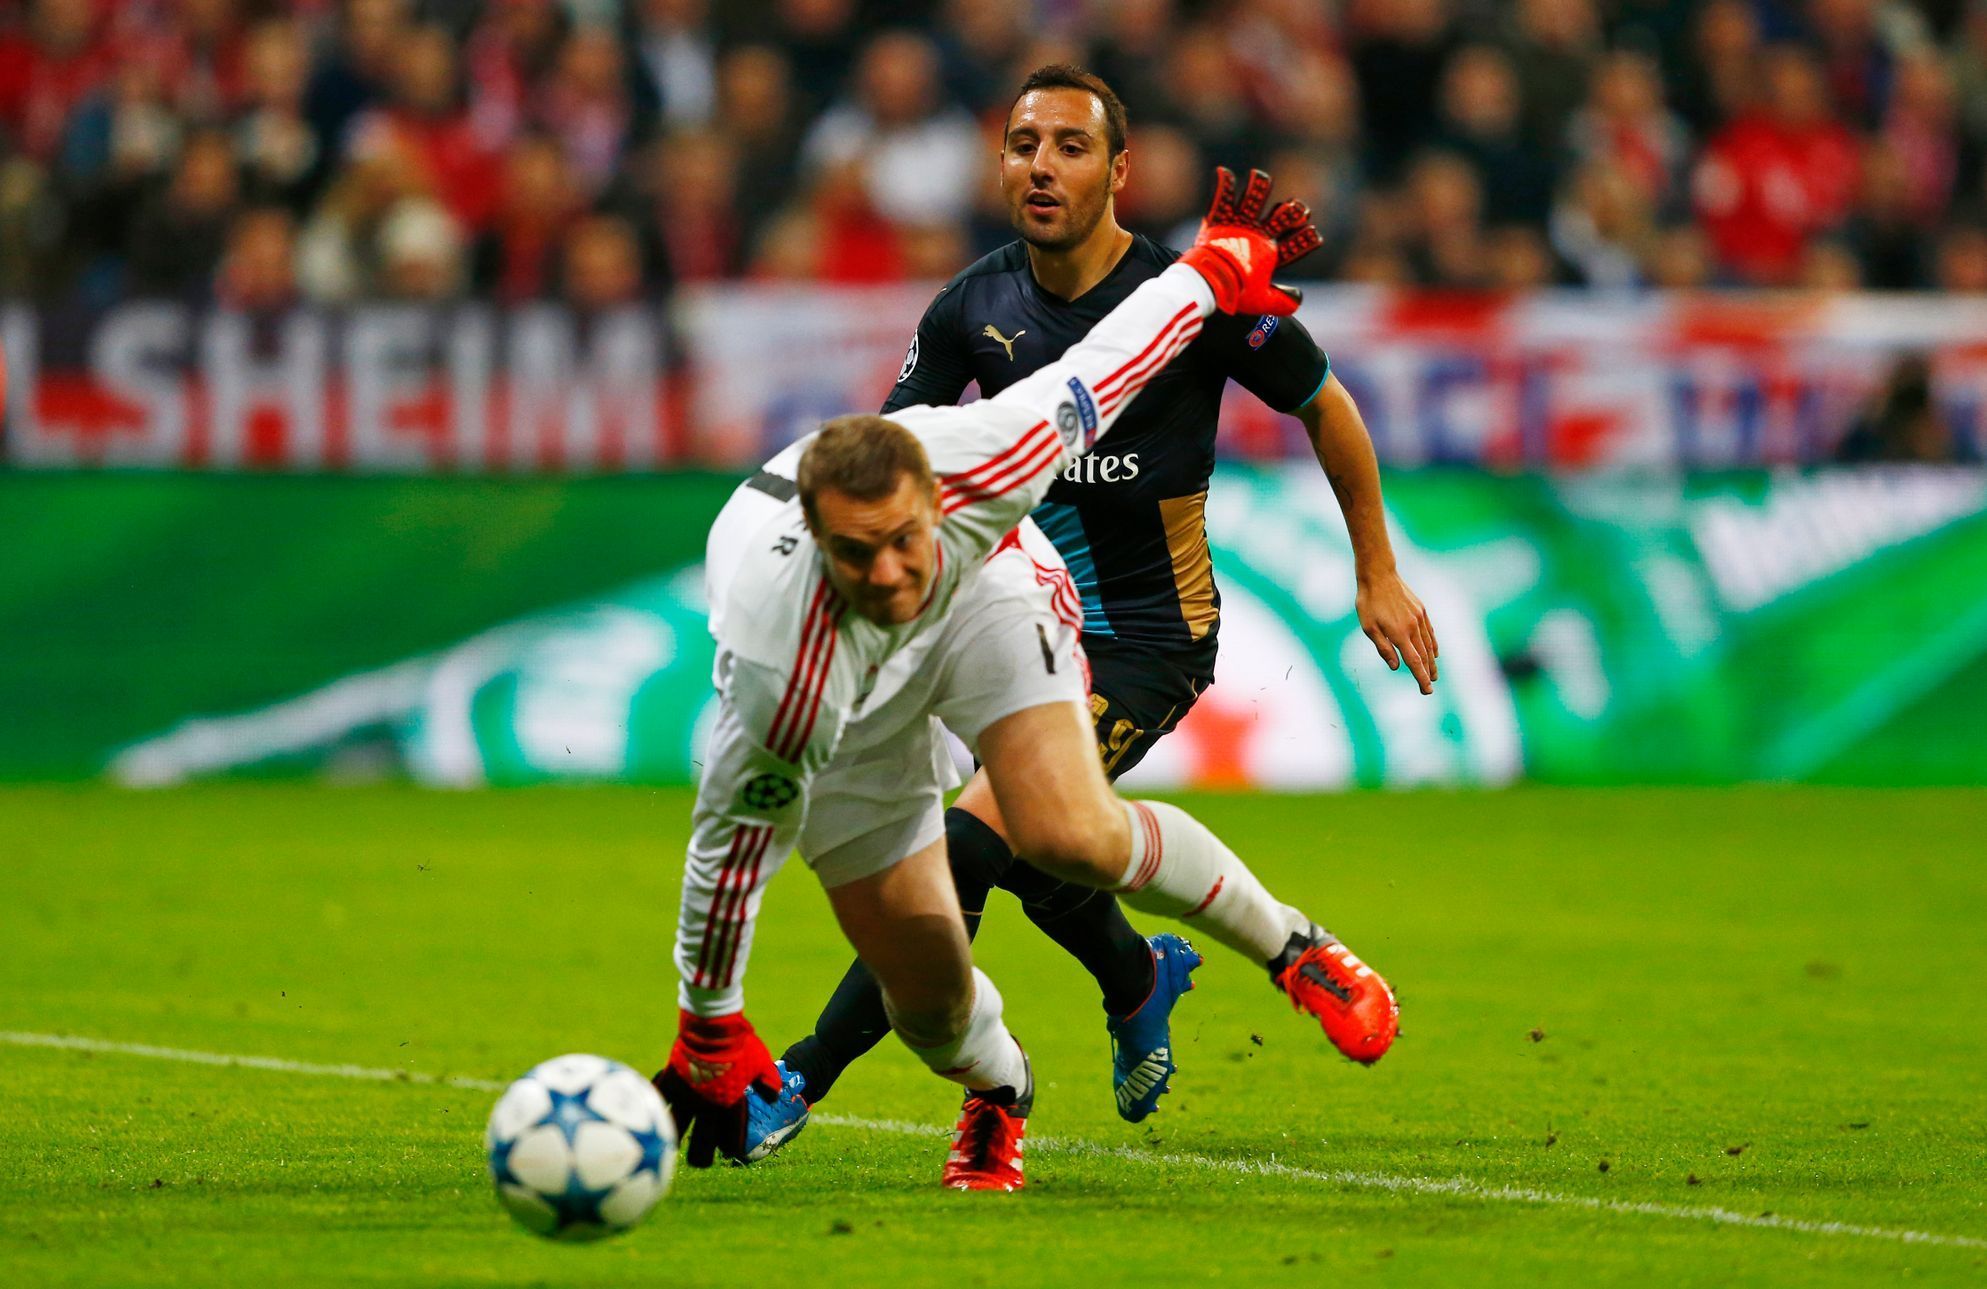 Arsenal's Santi Cazorla in action with Bayern Munich's Manuel Neuer